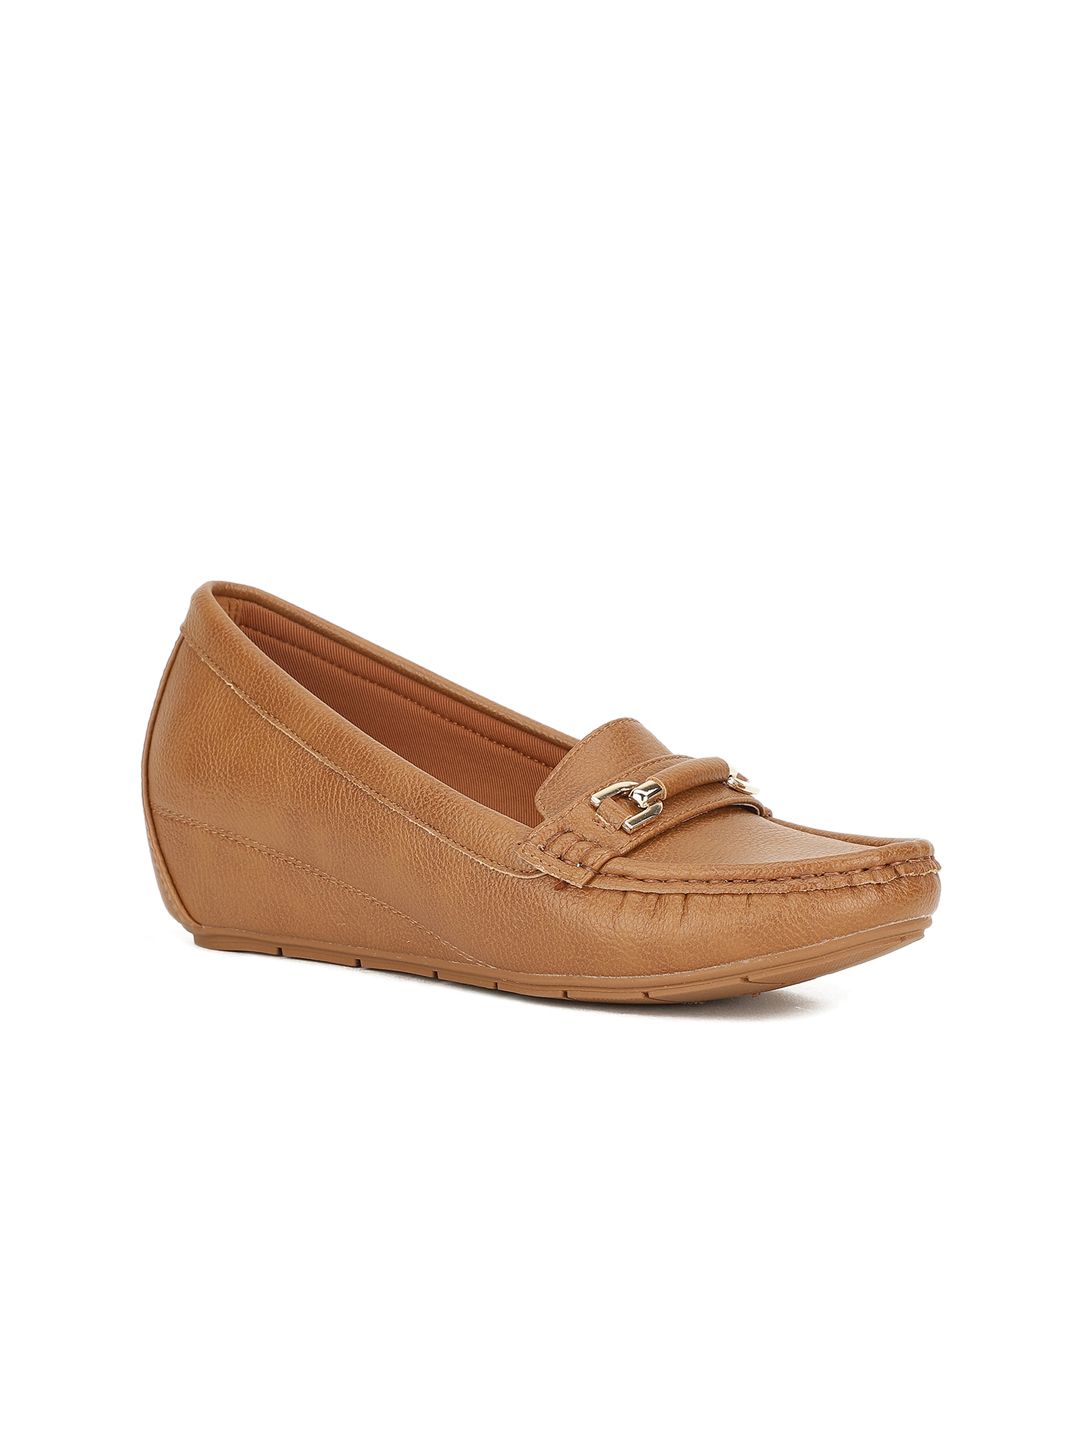 Bata Women Tan Solid PU Loafers Price in India